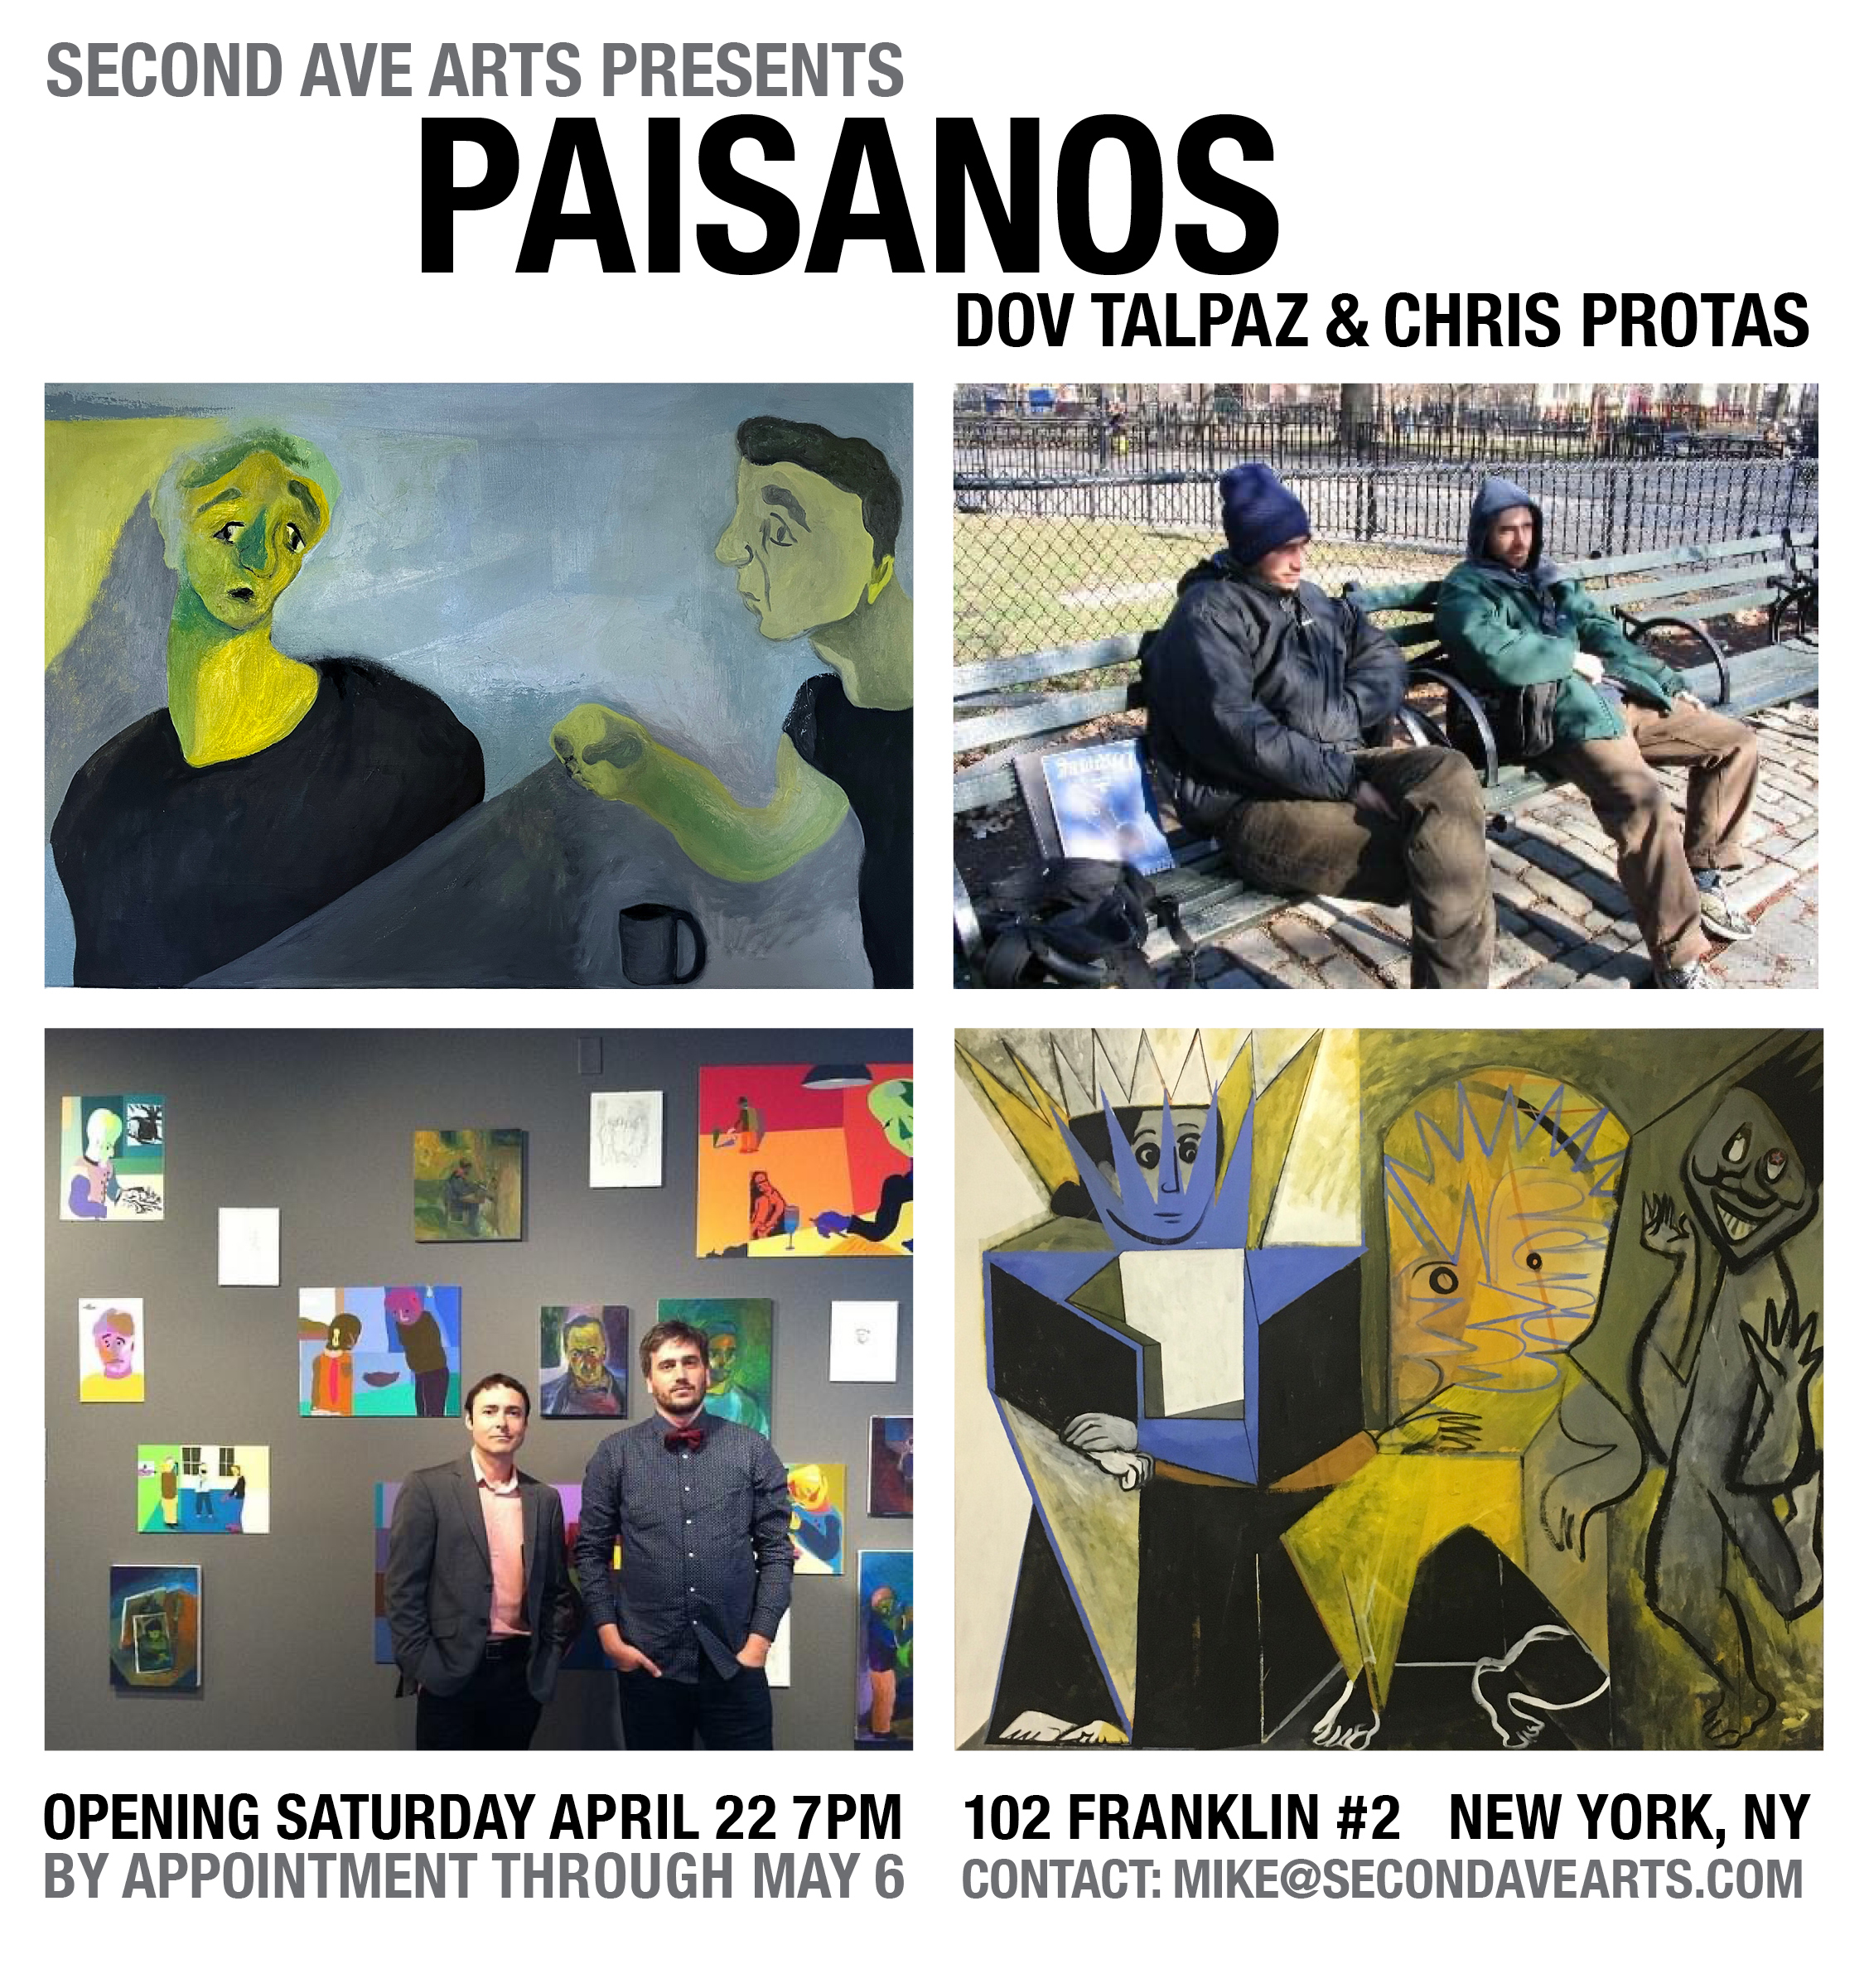 Paisanos - Dov Talpaz and Chris Protas